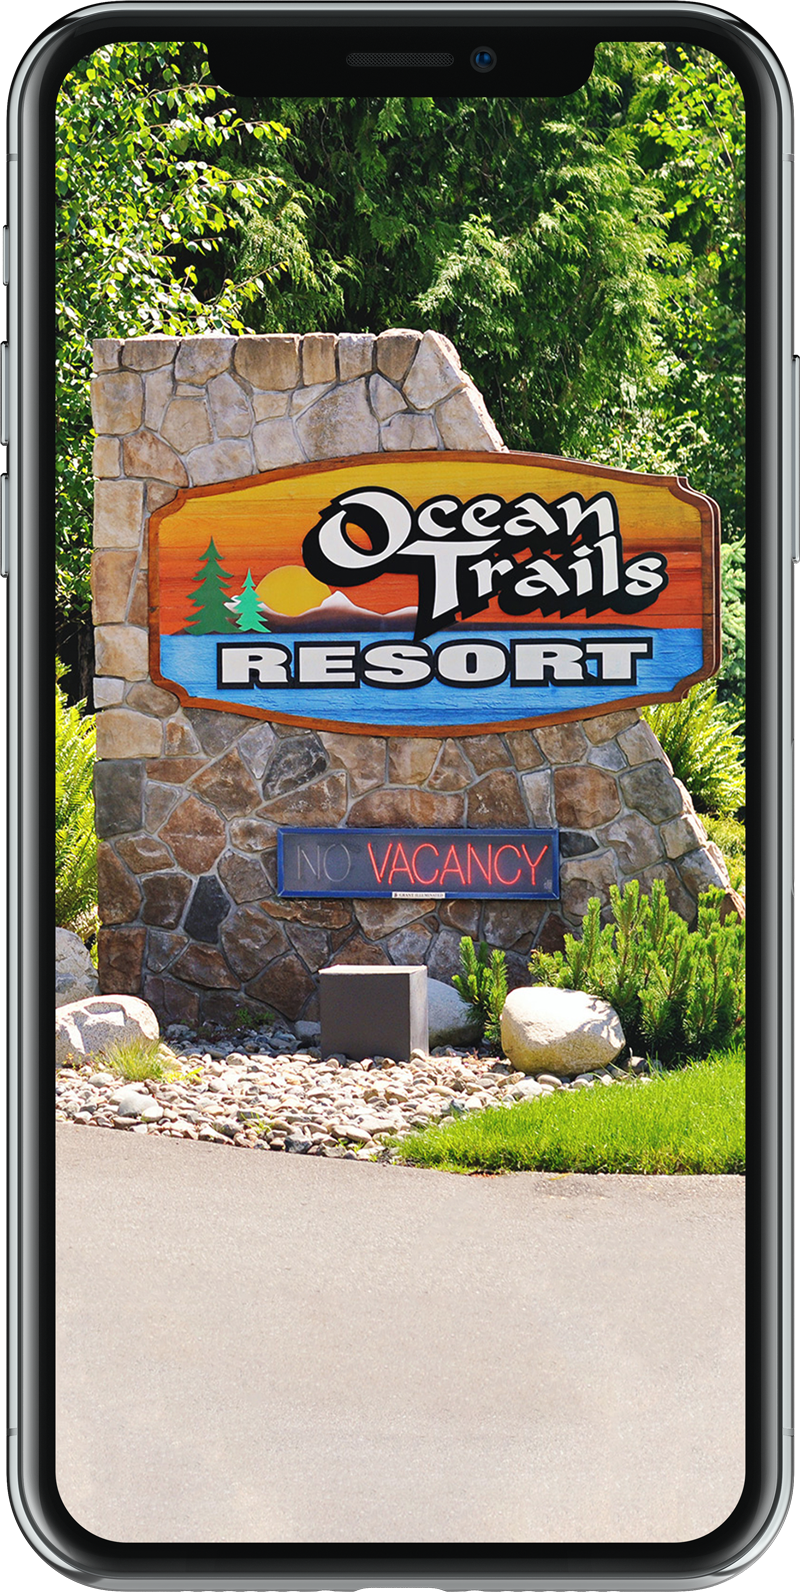 Ocean Trails Resort welcome sign phone wallpaper